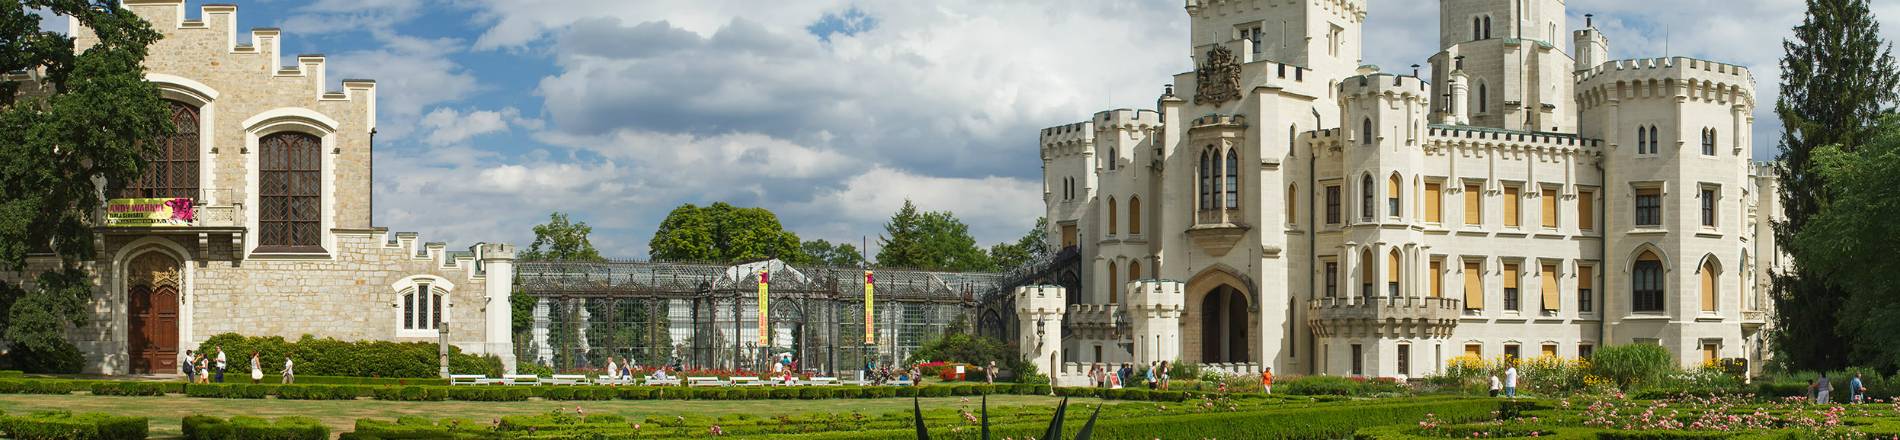 Češki Krumlov i dvorci južne Češke 3 dana PREMIUM